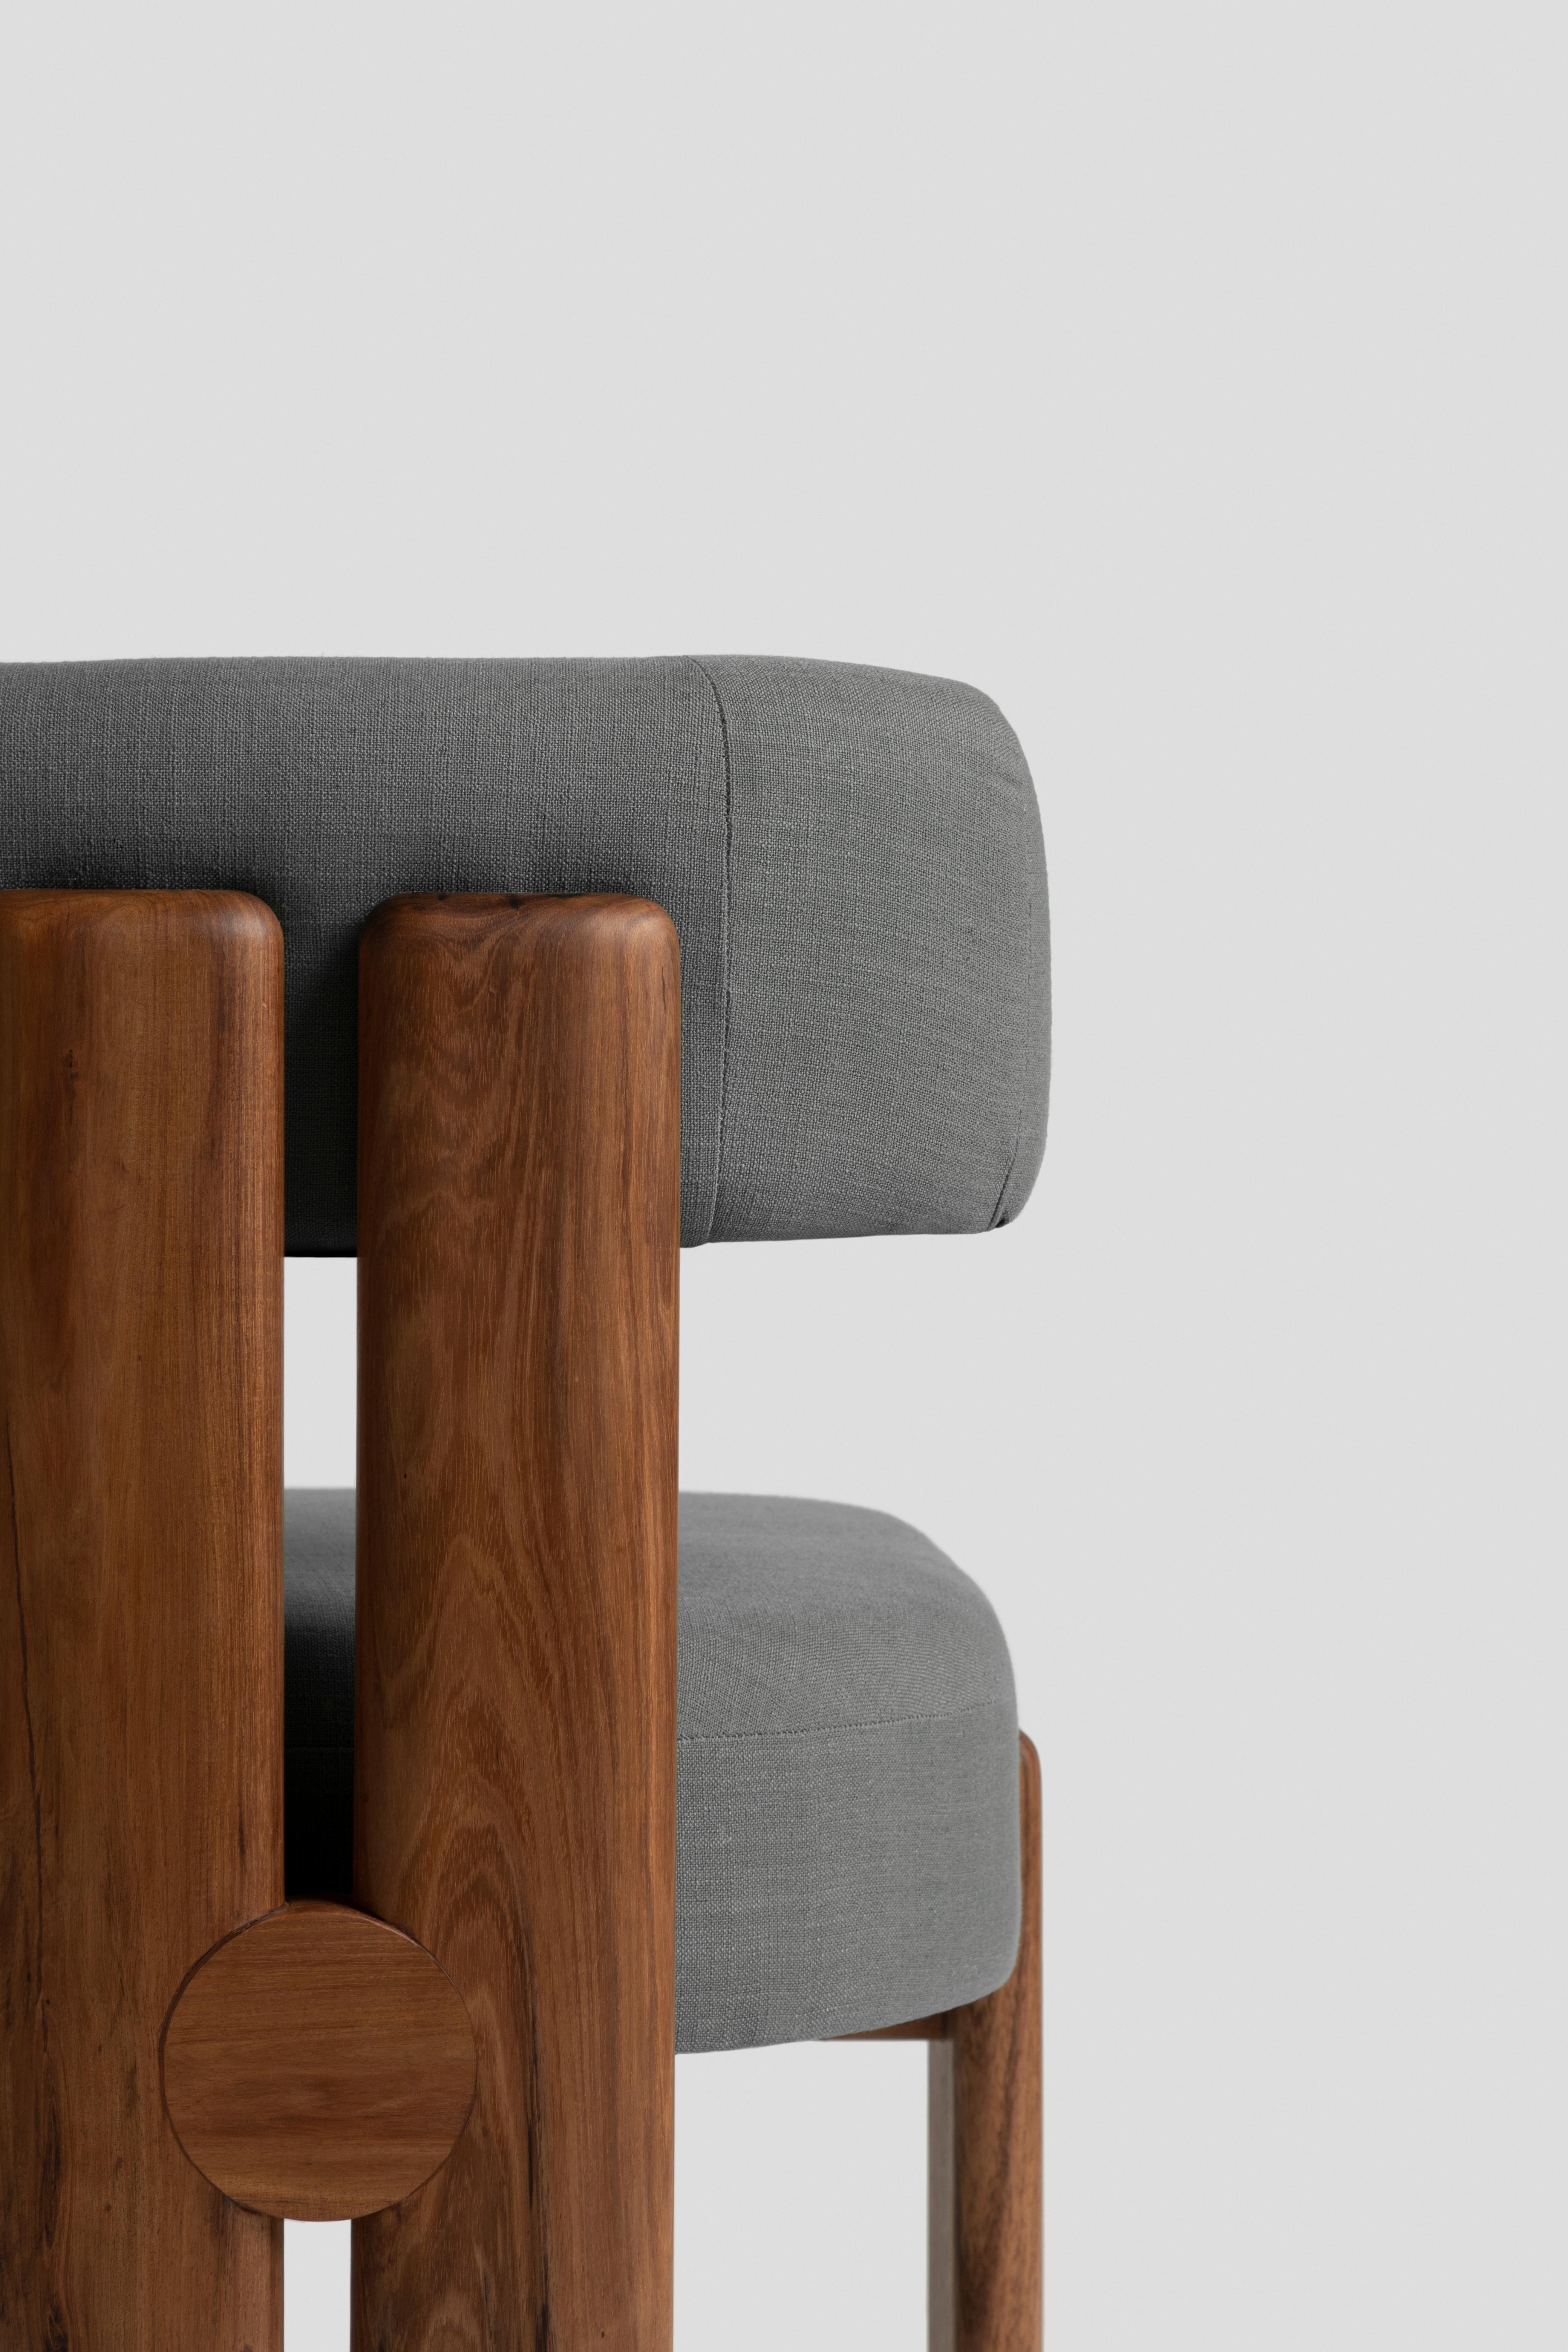 De la Paz Dining Chair Solid Wood, Contemporary Mexican Design For Sale 1